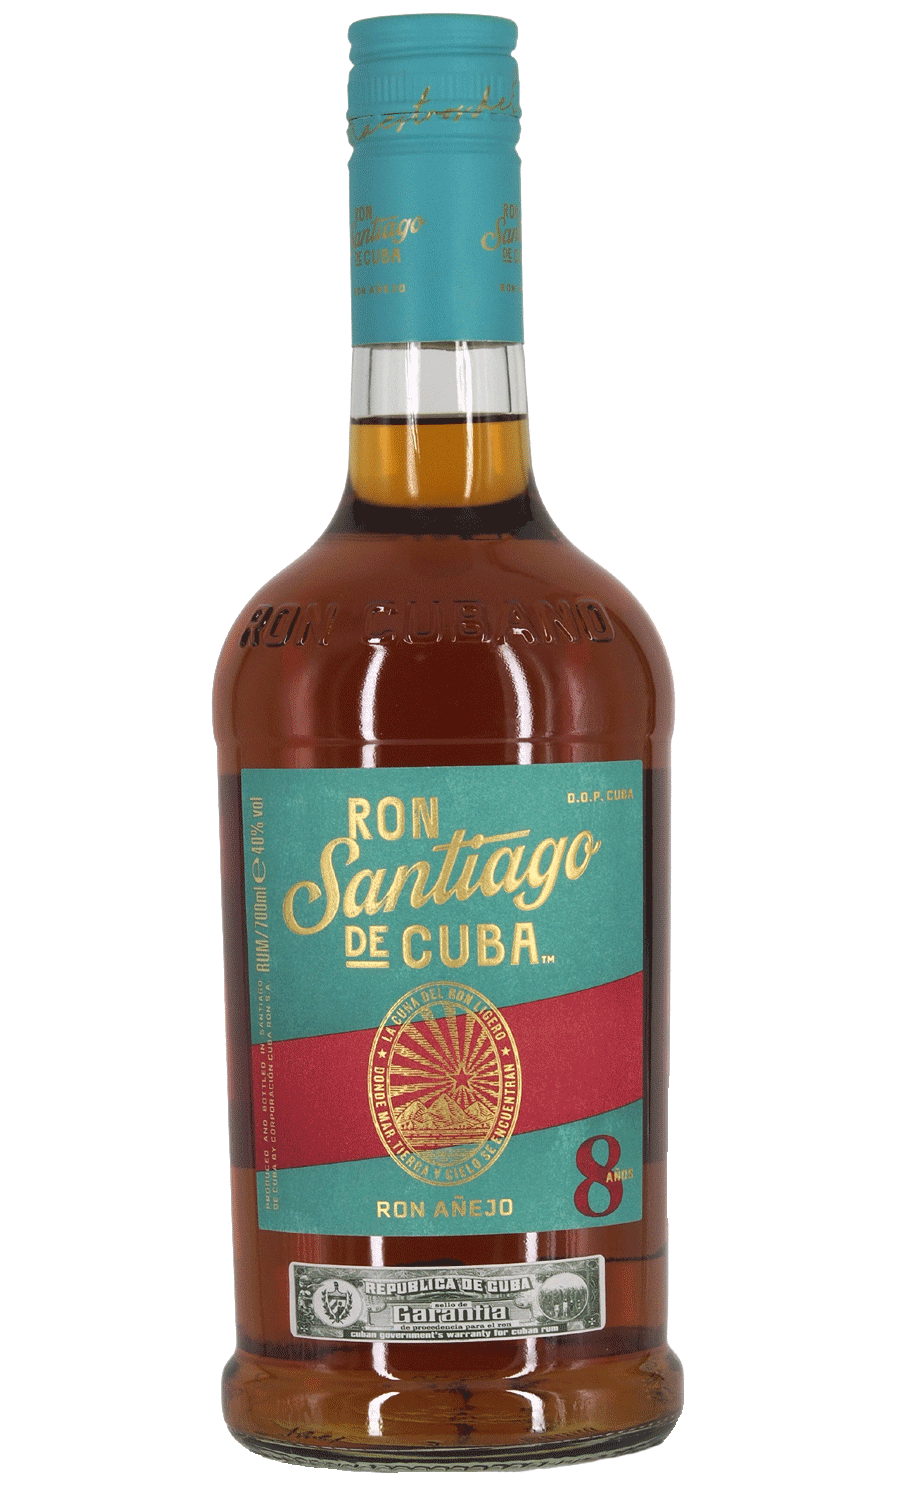 Ron Santiago de Cuba 8 Anejo Rum